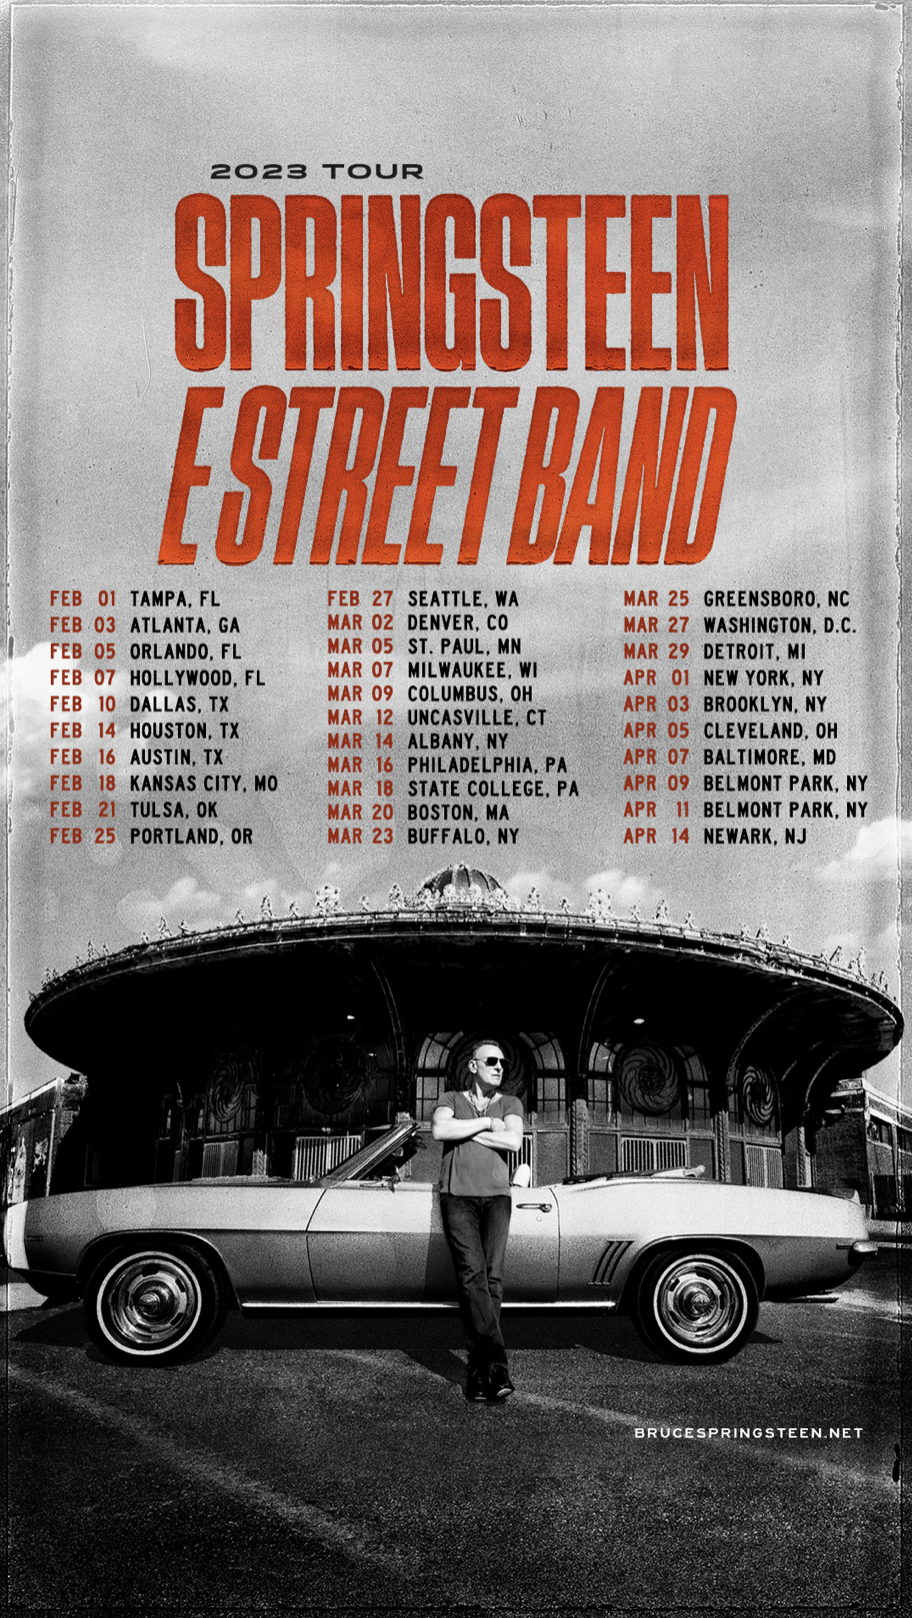 Bruce Springsteen U.S. tour itinerary - Credit: ShoreFire Media